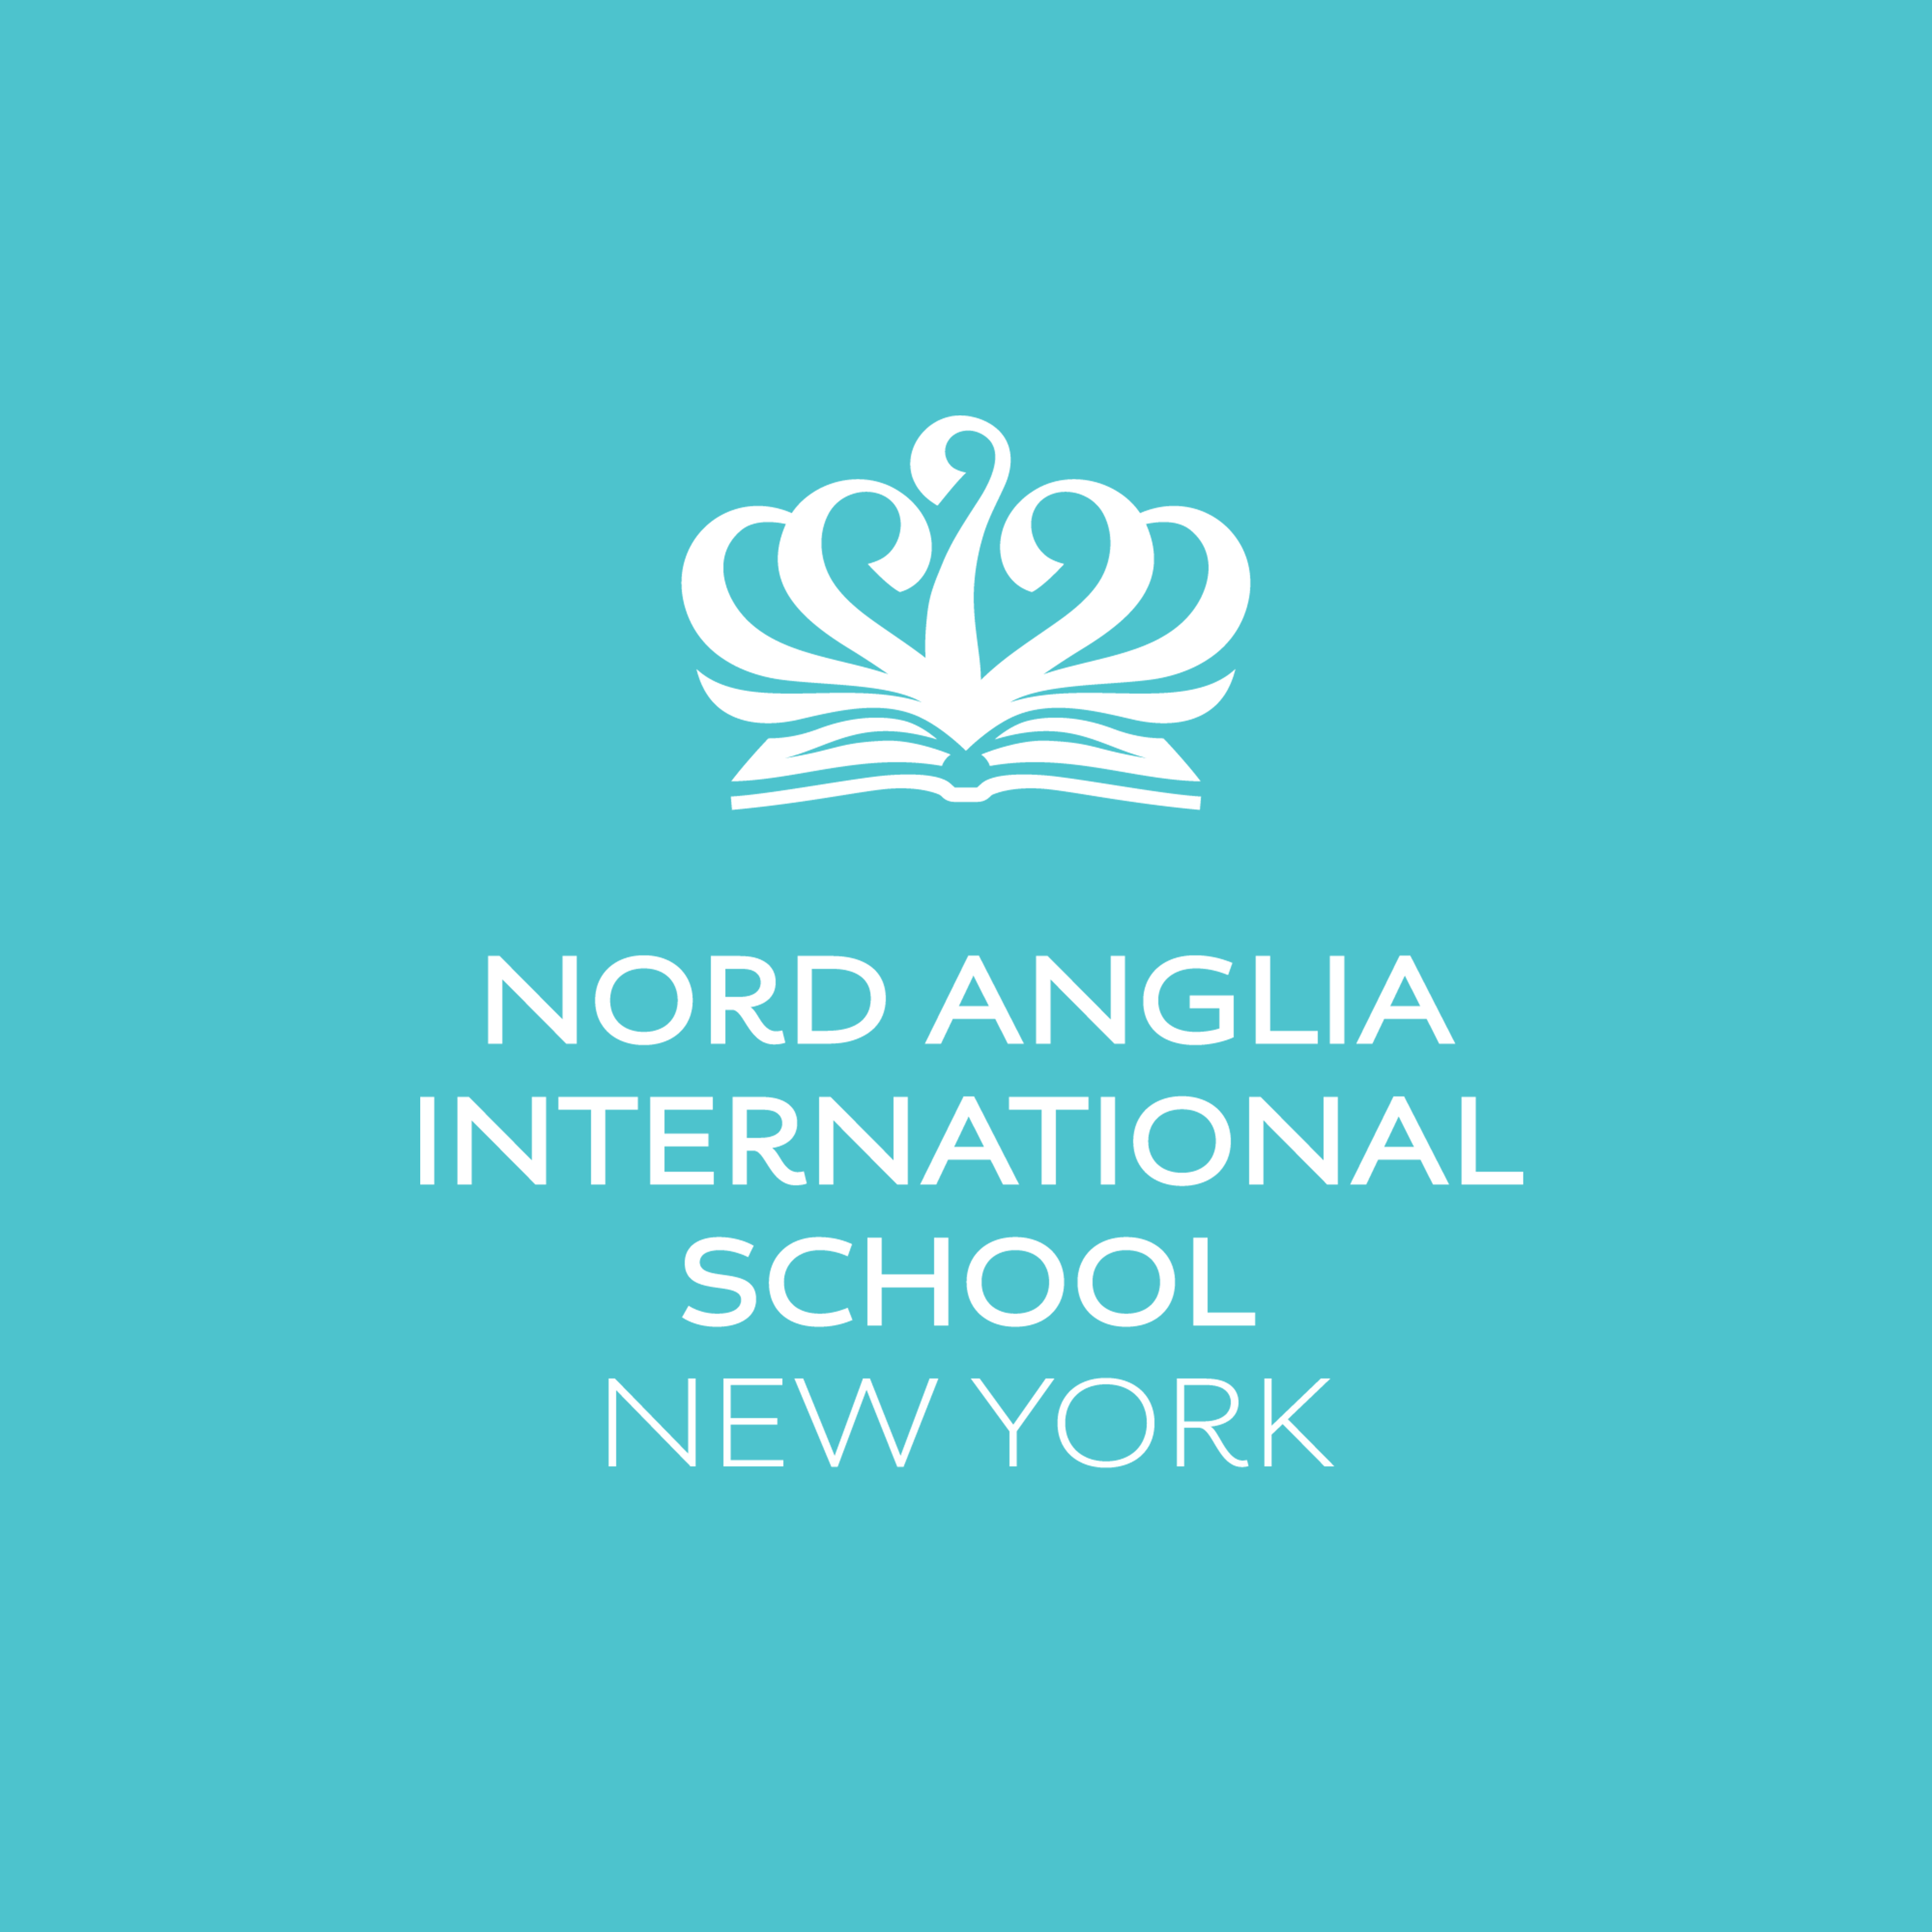 Nord Anglia International School, New York - New York, NY 10003 - (212)600-2010 | ShowMeLocal.com